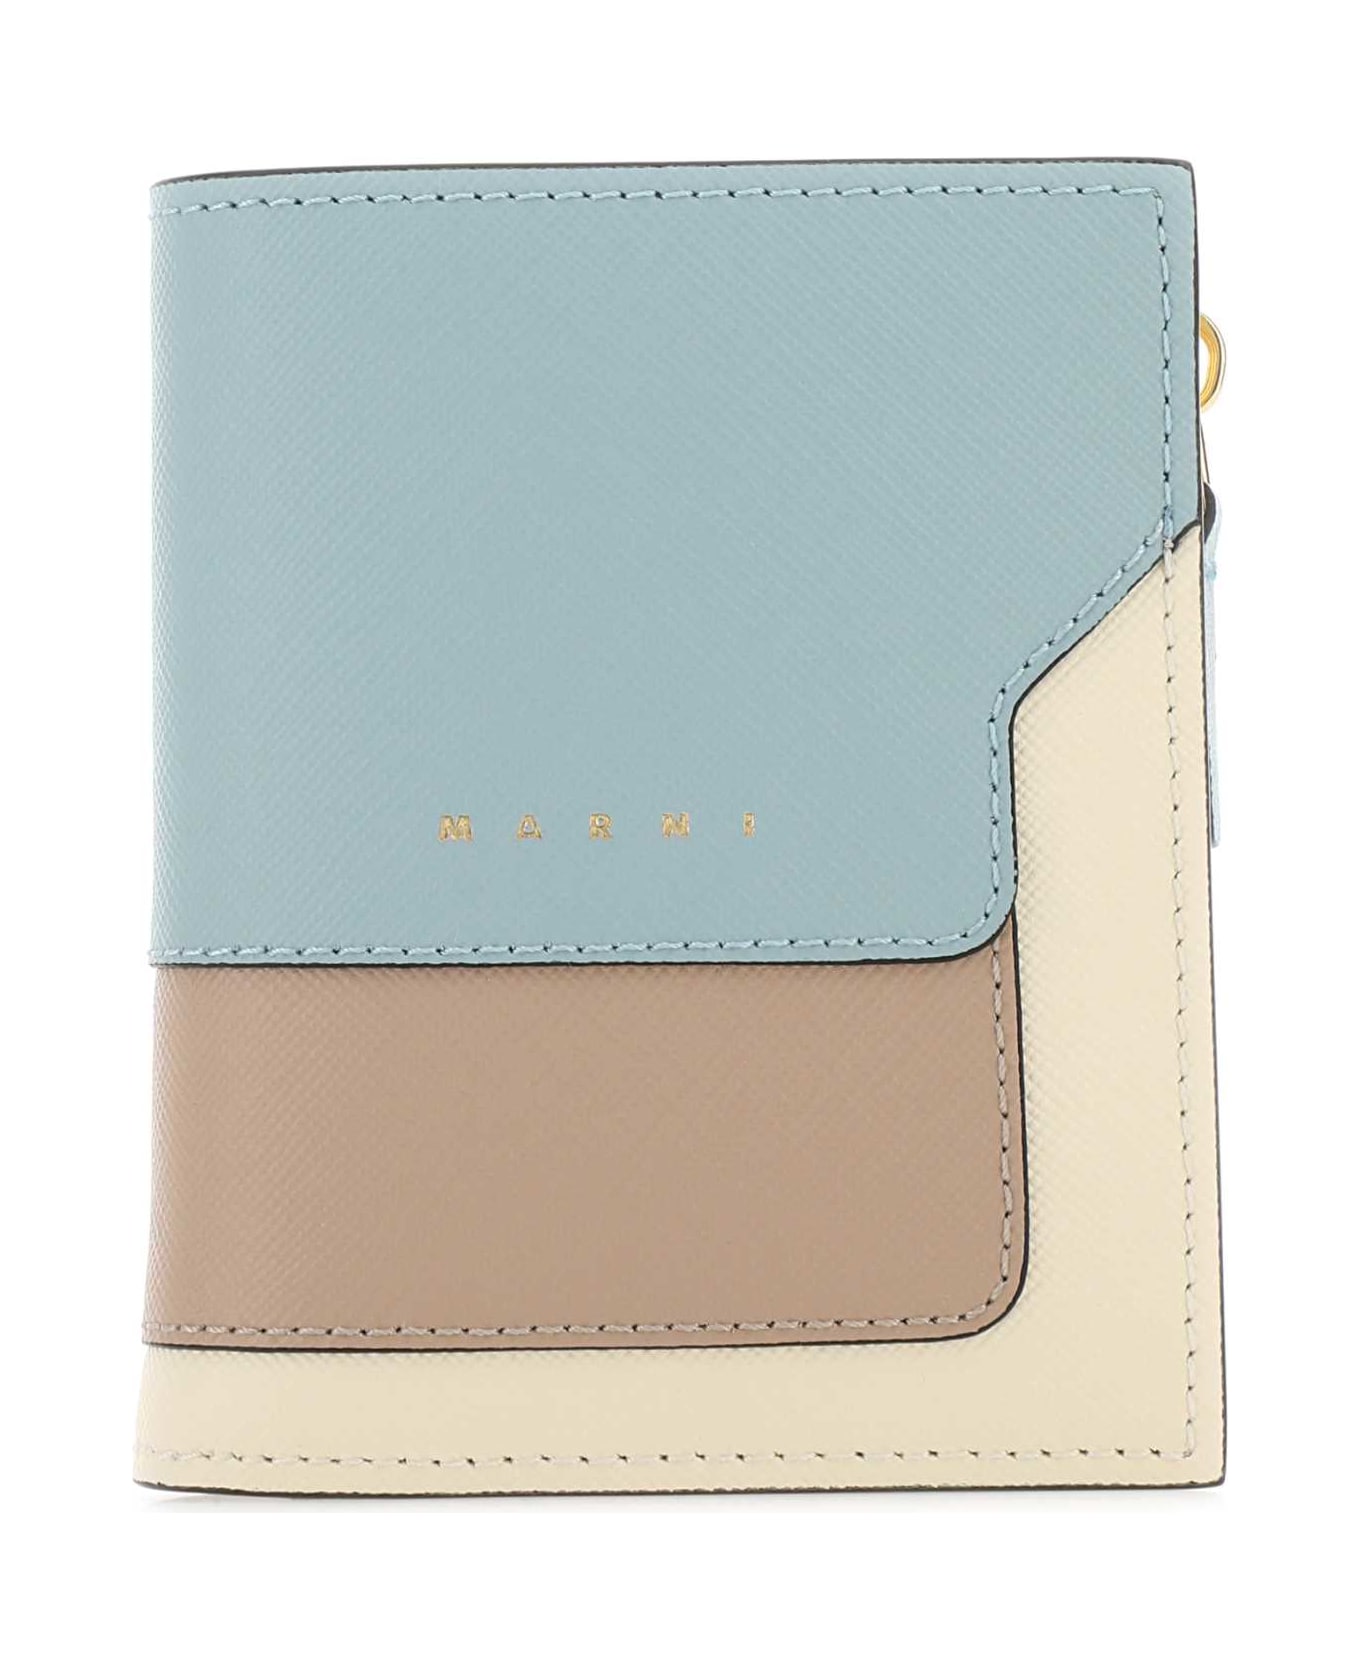 Marni Multicolor Leather Wallet - Z606M 財布